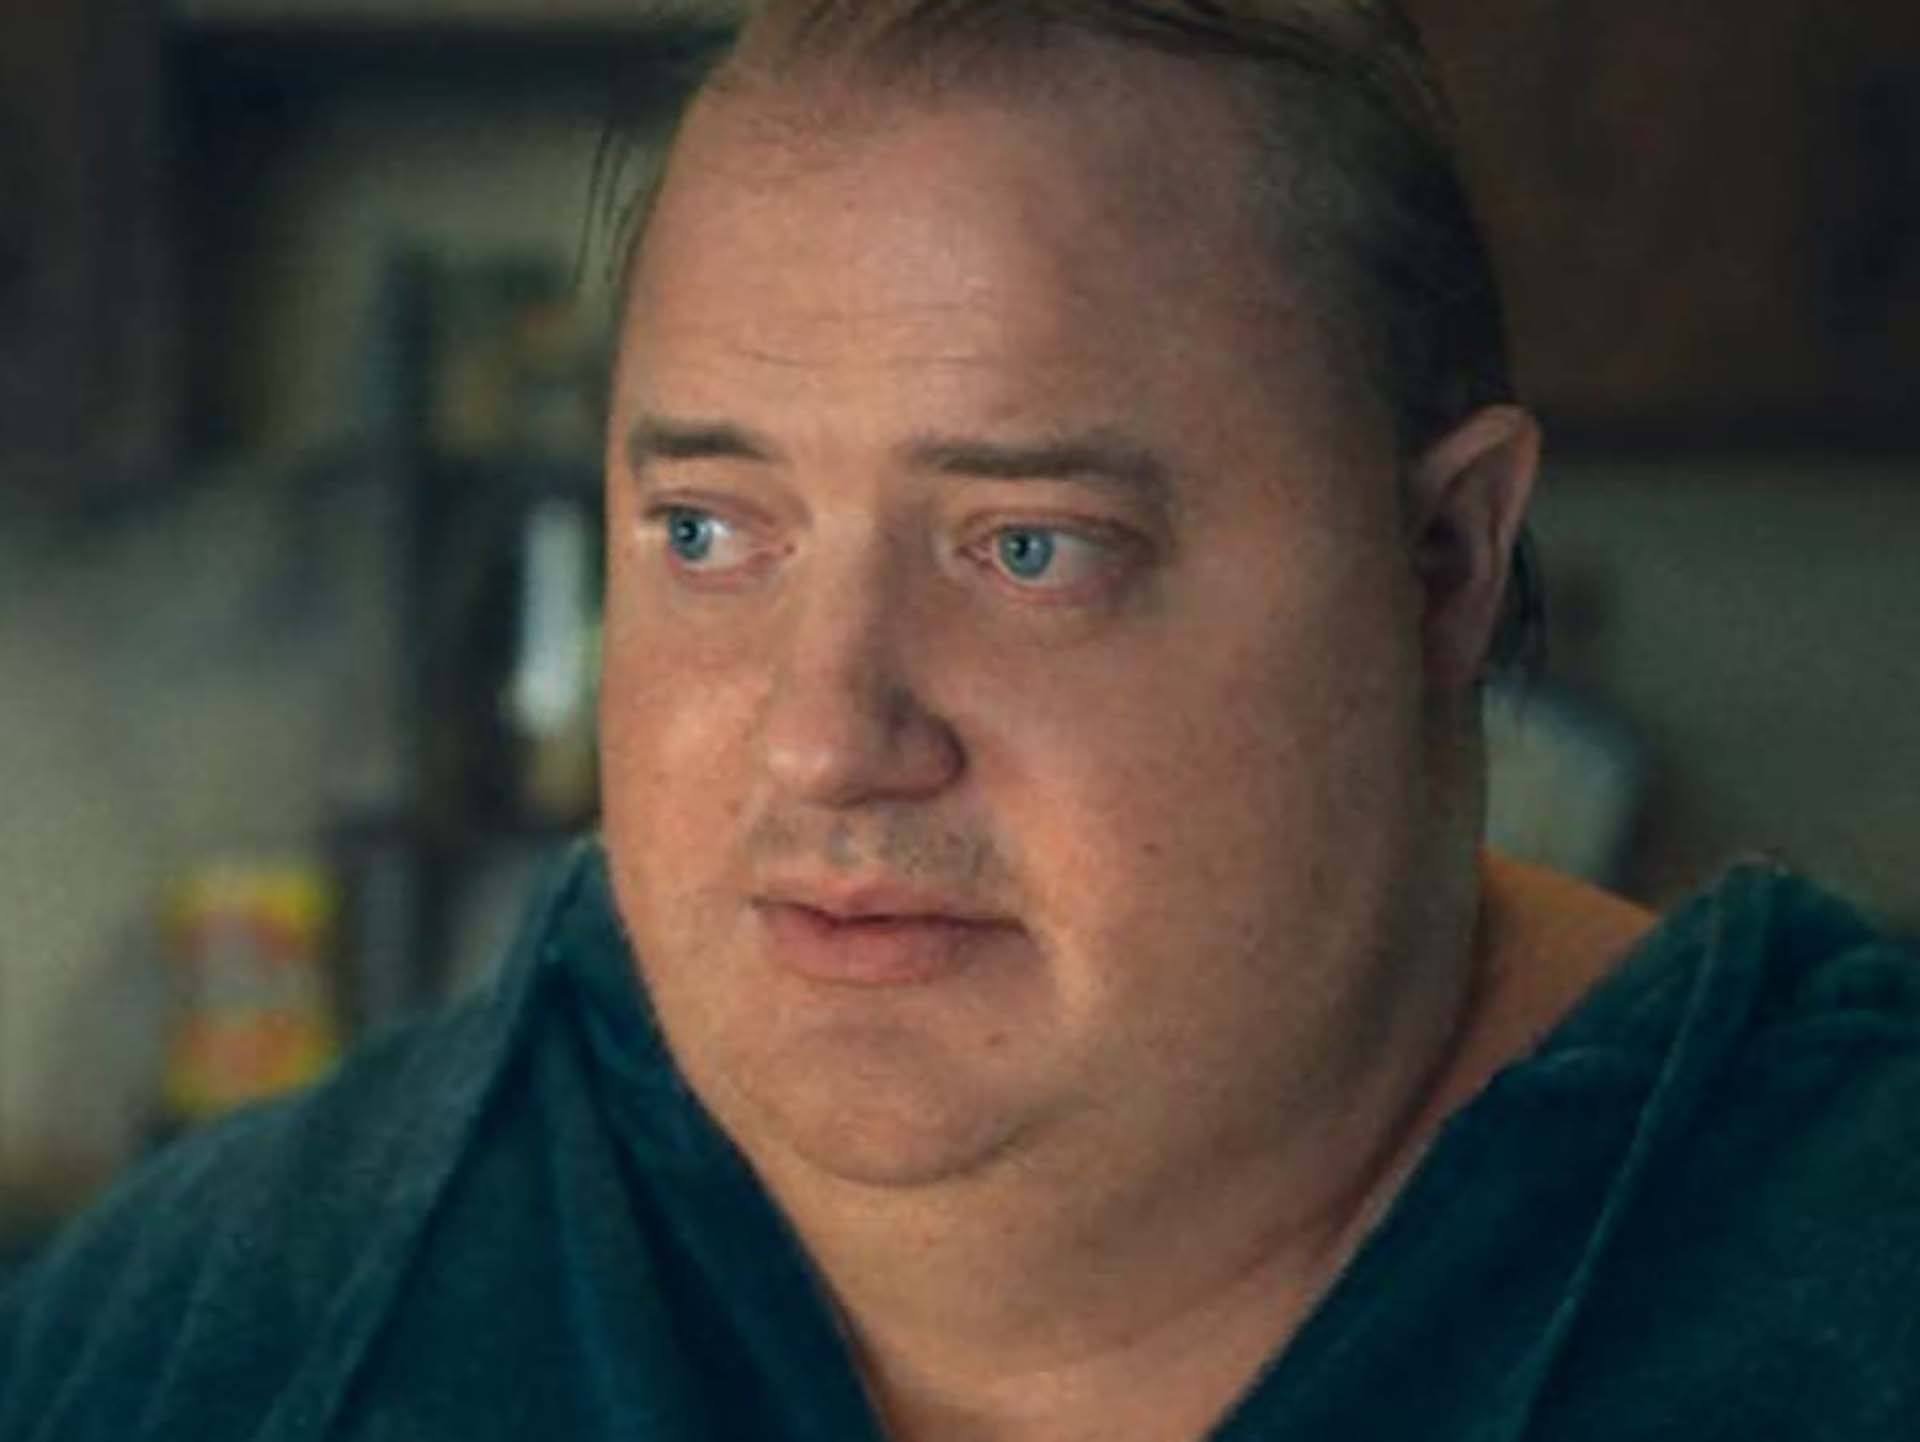 Brendan Fraser caracterizado como un profesor de literatura de 270 kilos de peso en la película The Whale de Darren Aronofsky